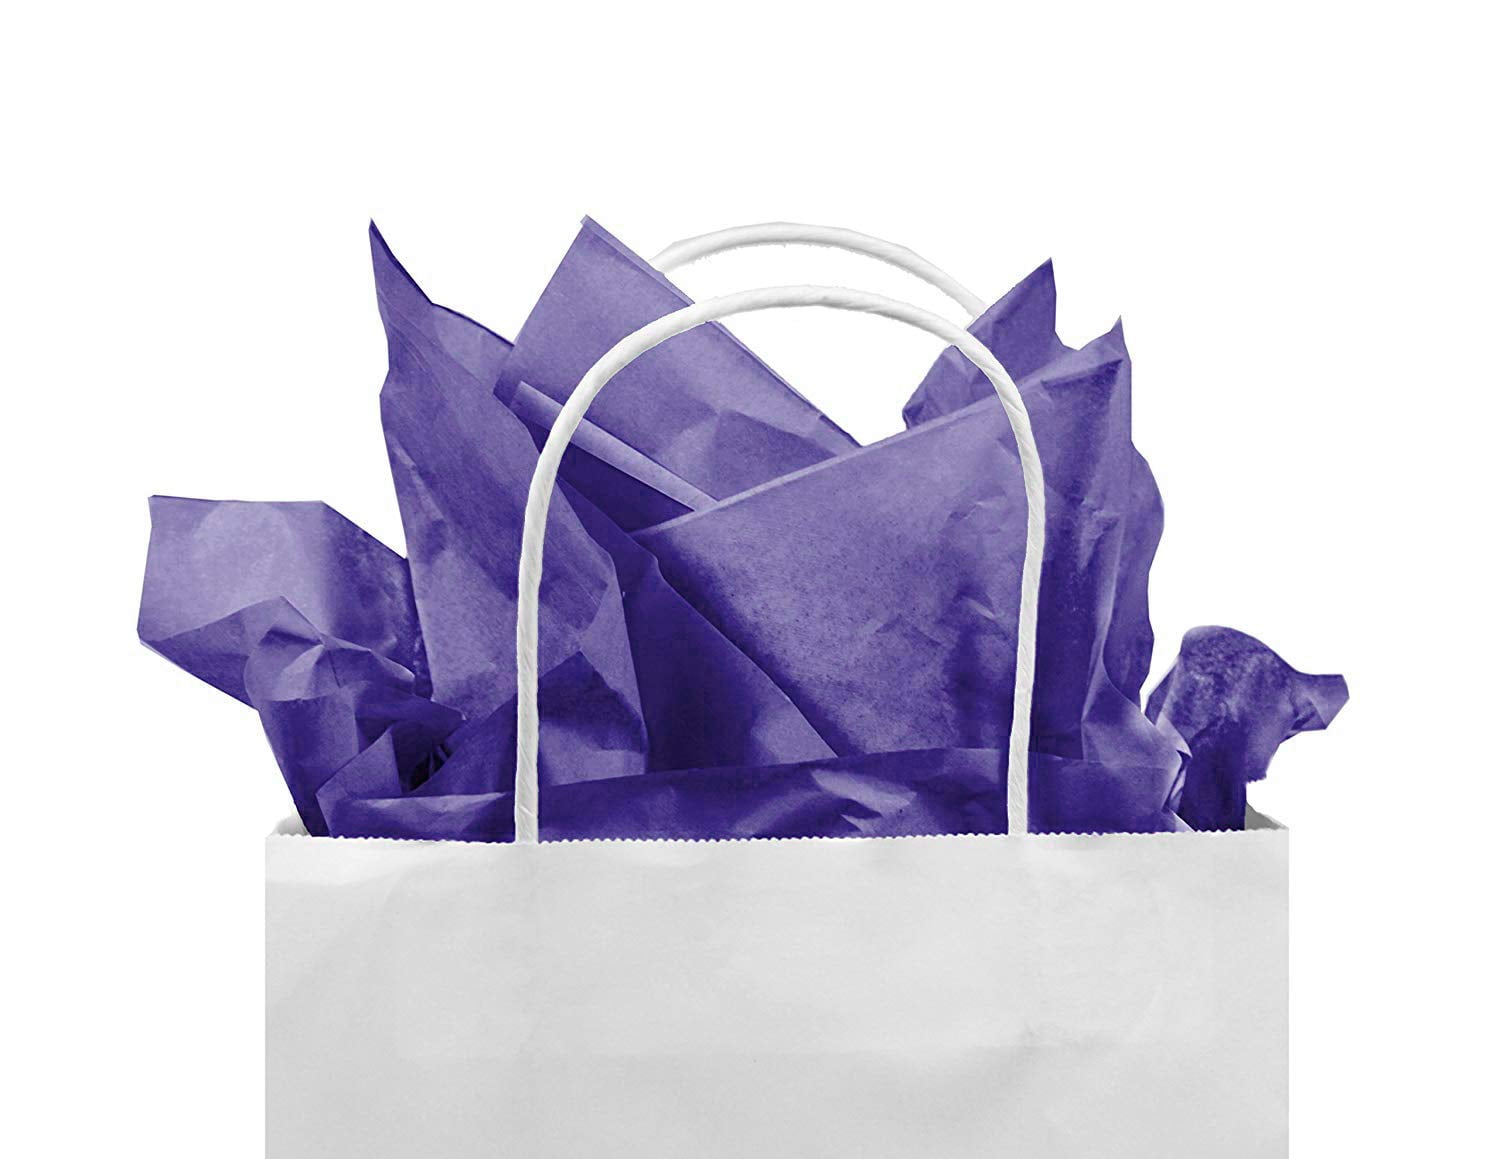 Details about   Gift Wrap Bag Tissue Paper White Foil Sequin Sparkle 20 Sheets 20x20 GREAT DEAL!